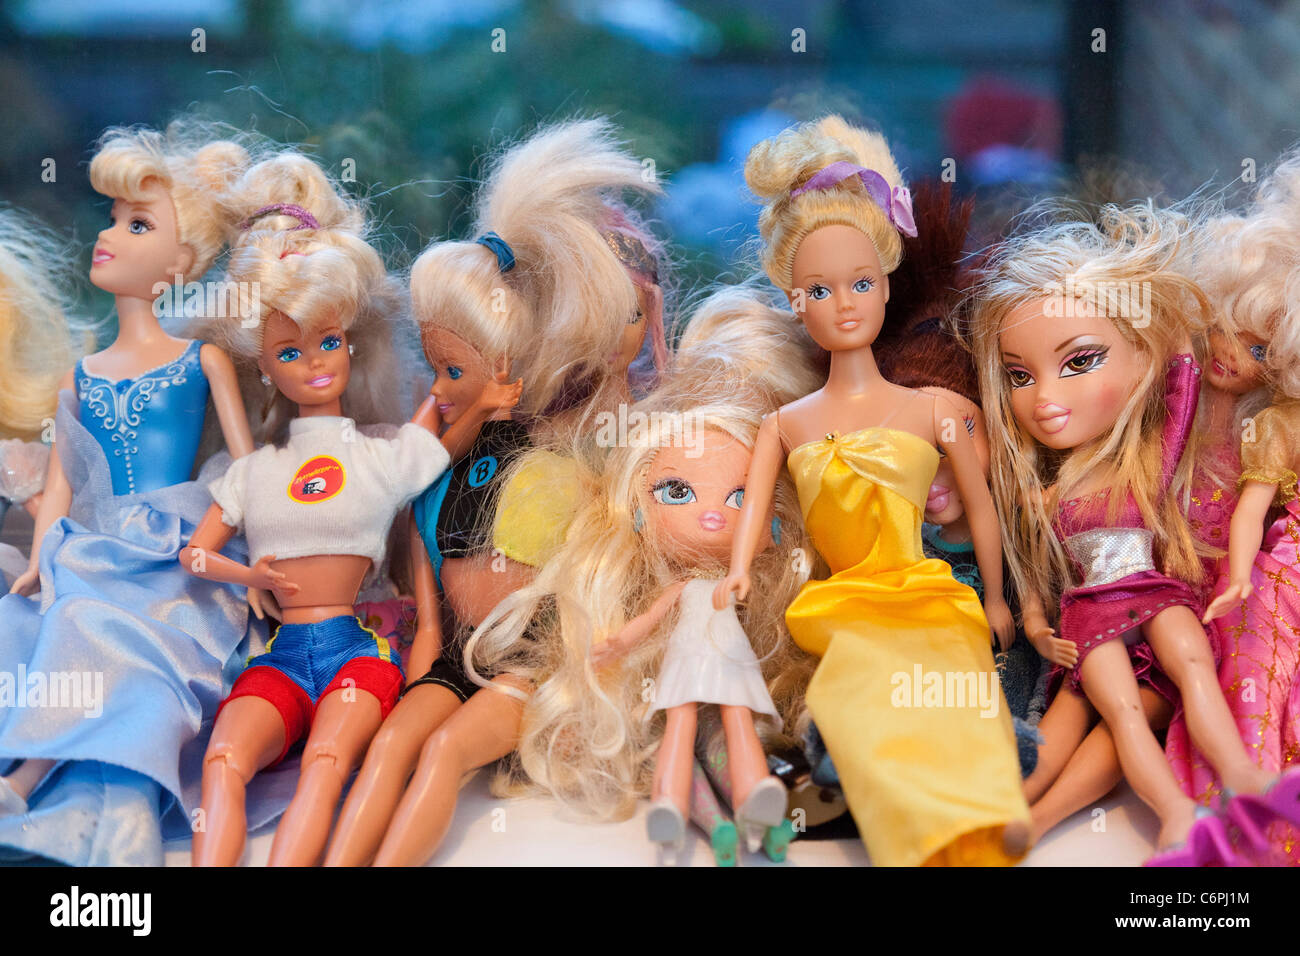 Barbie and Bratz dolls together Stock Photo